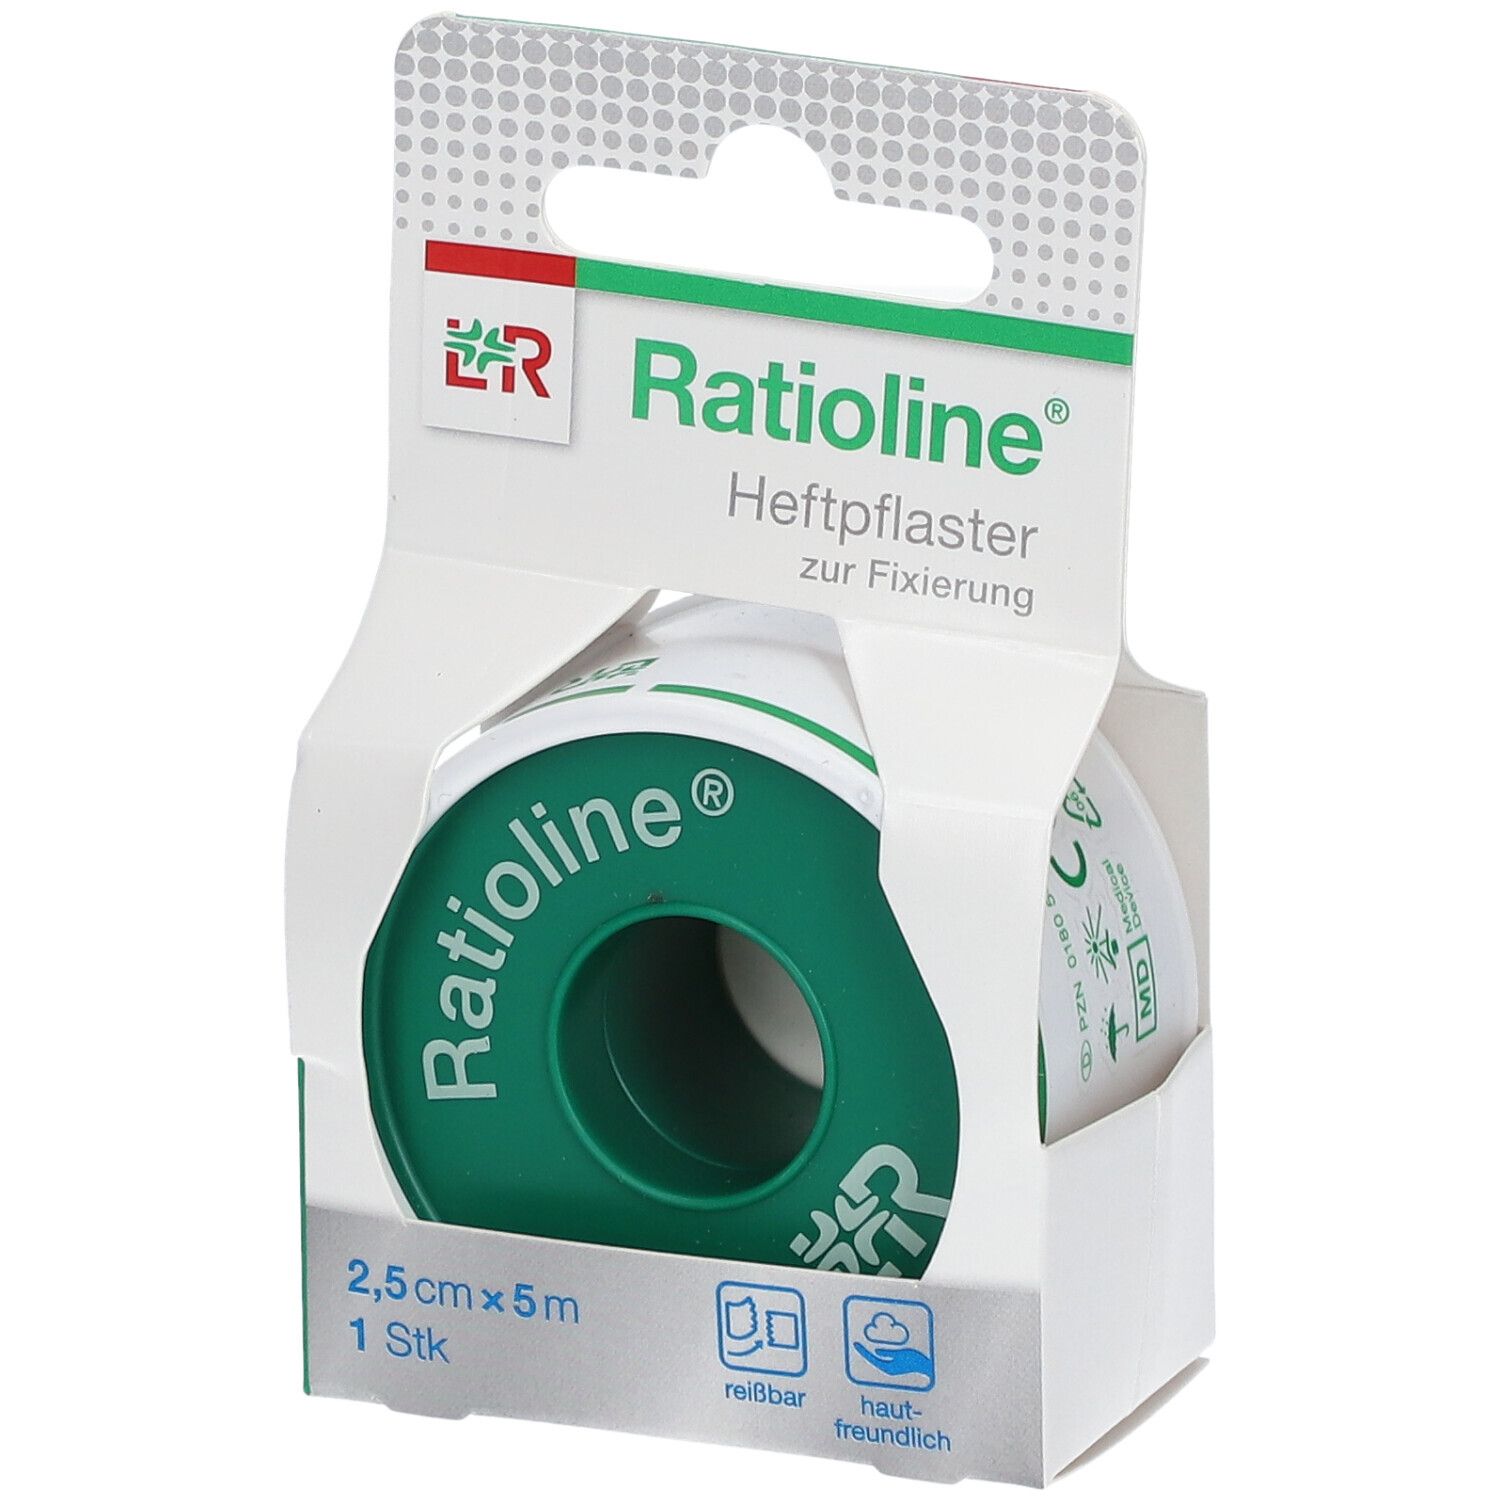 Ratioline® acute Heftpflaster 2,5 cm x 5 m